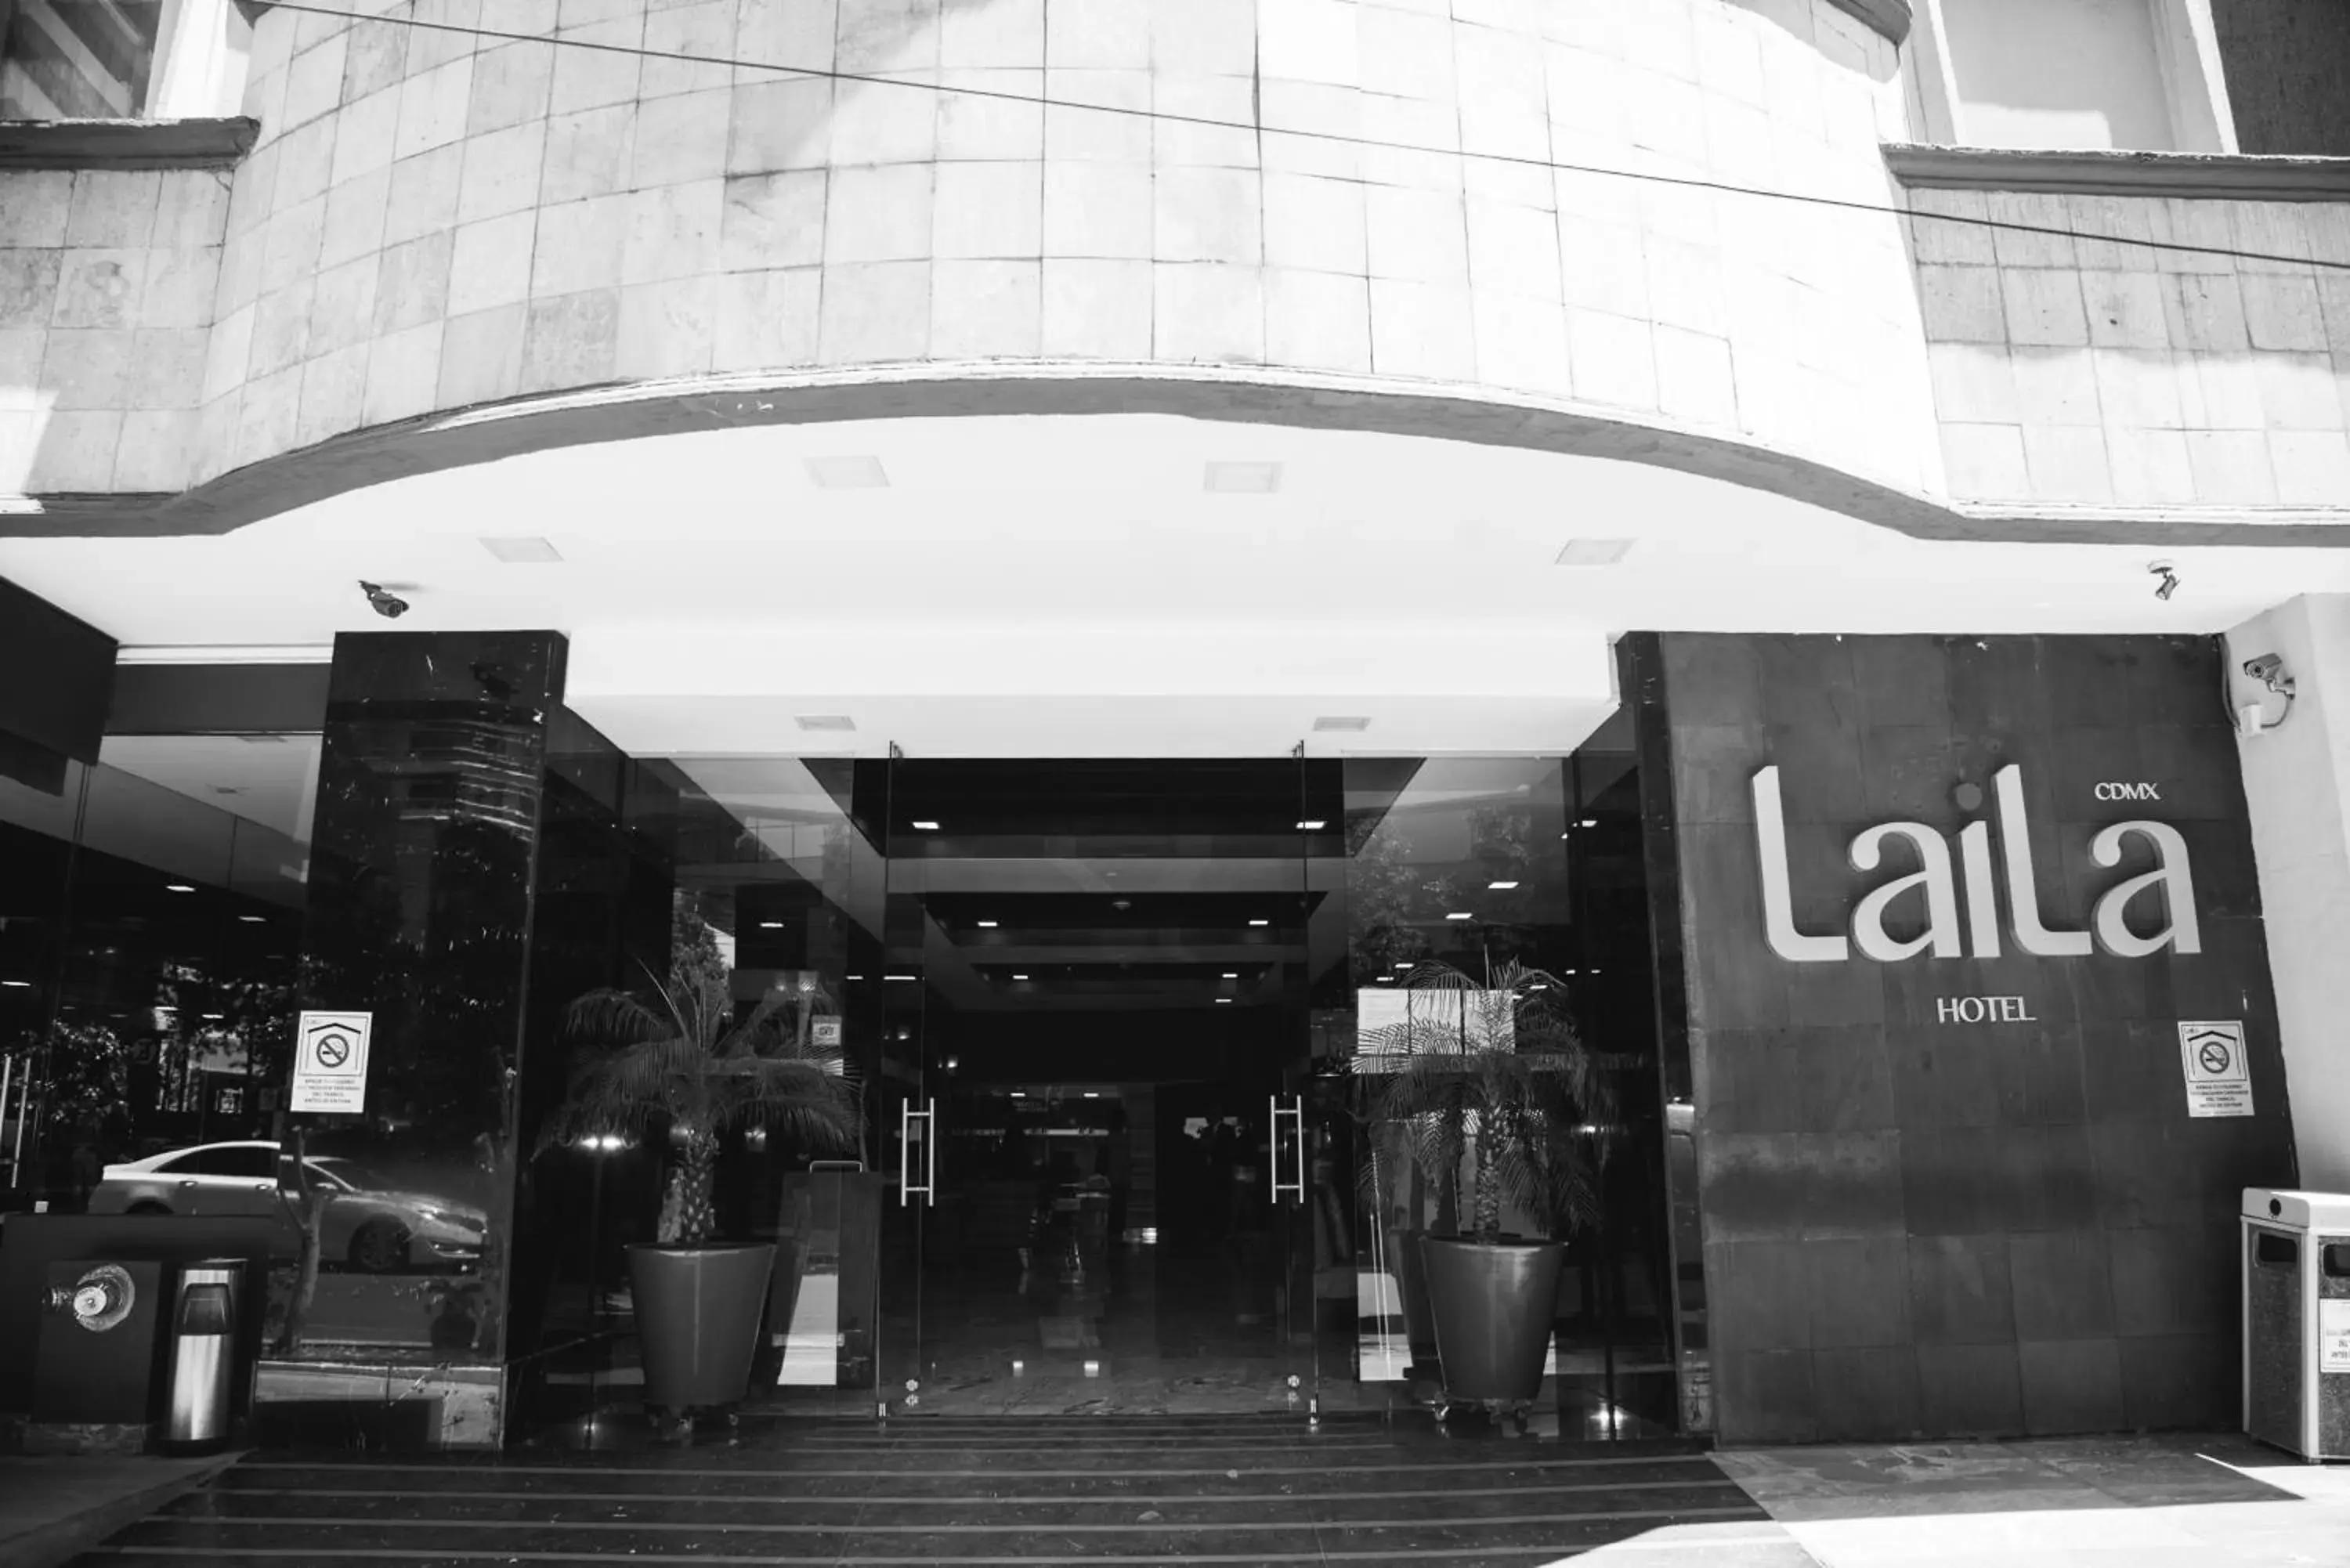 Facade/entrance in LaiLa Hotel CDMX